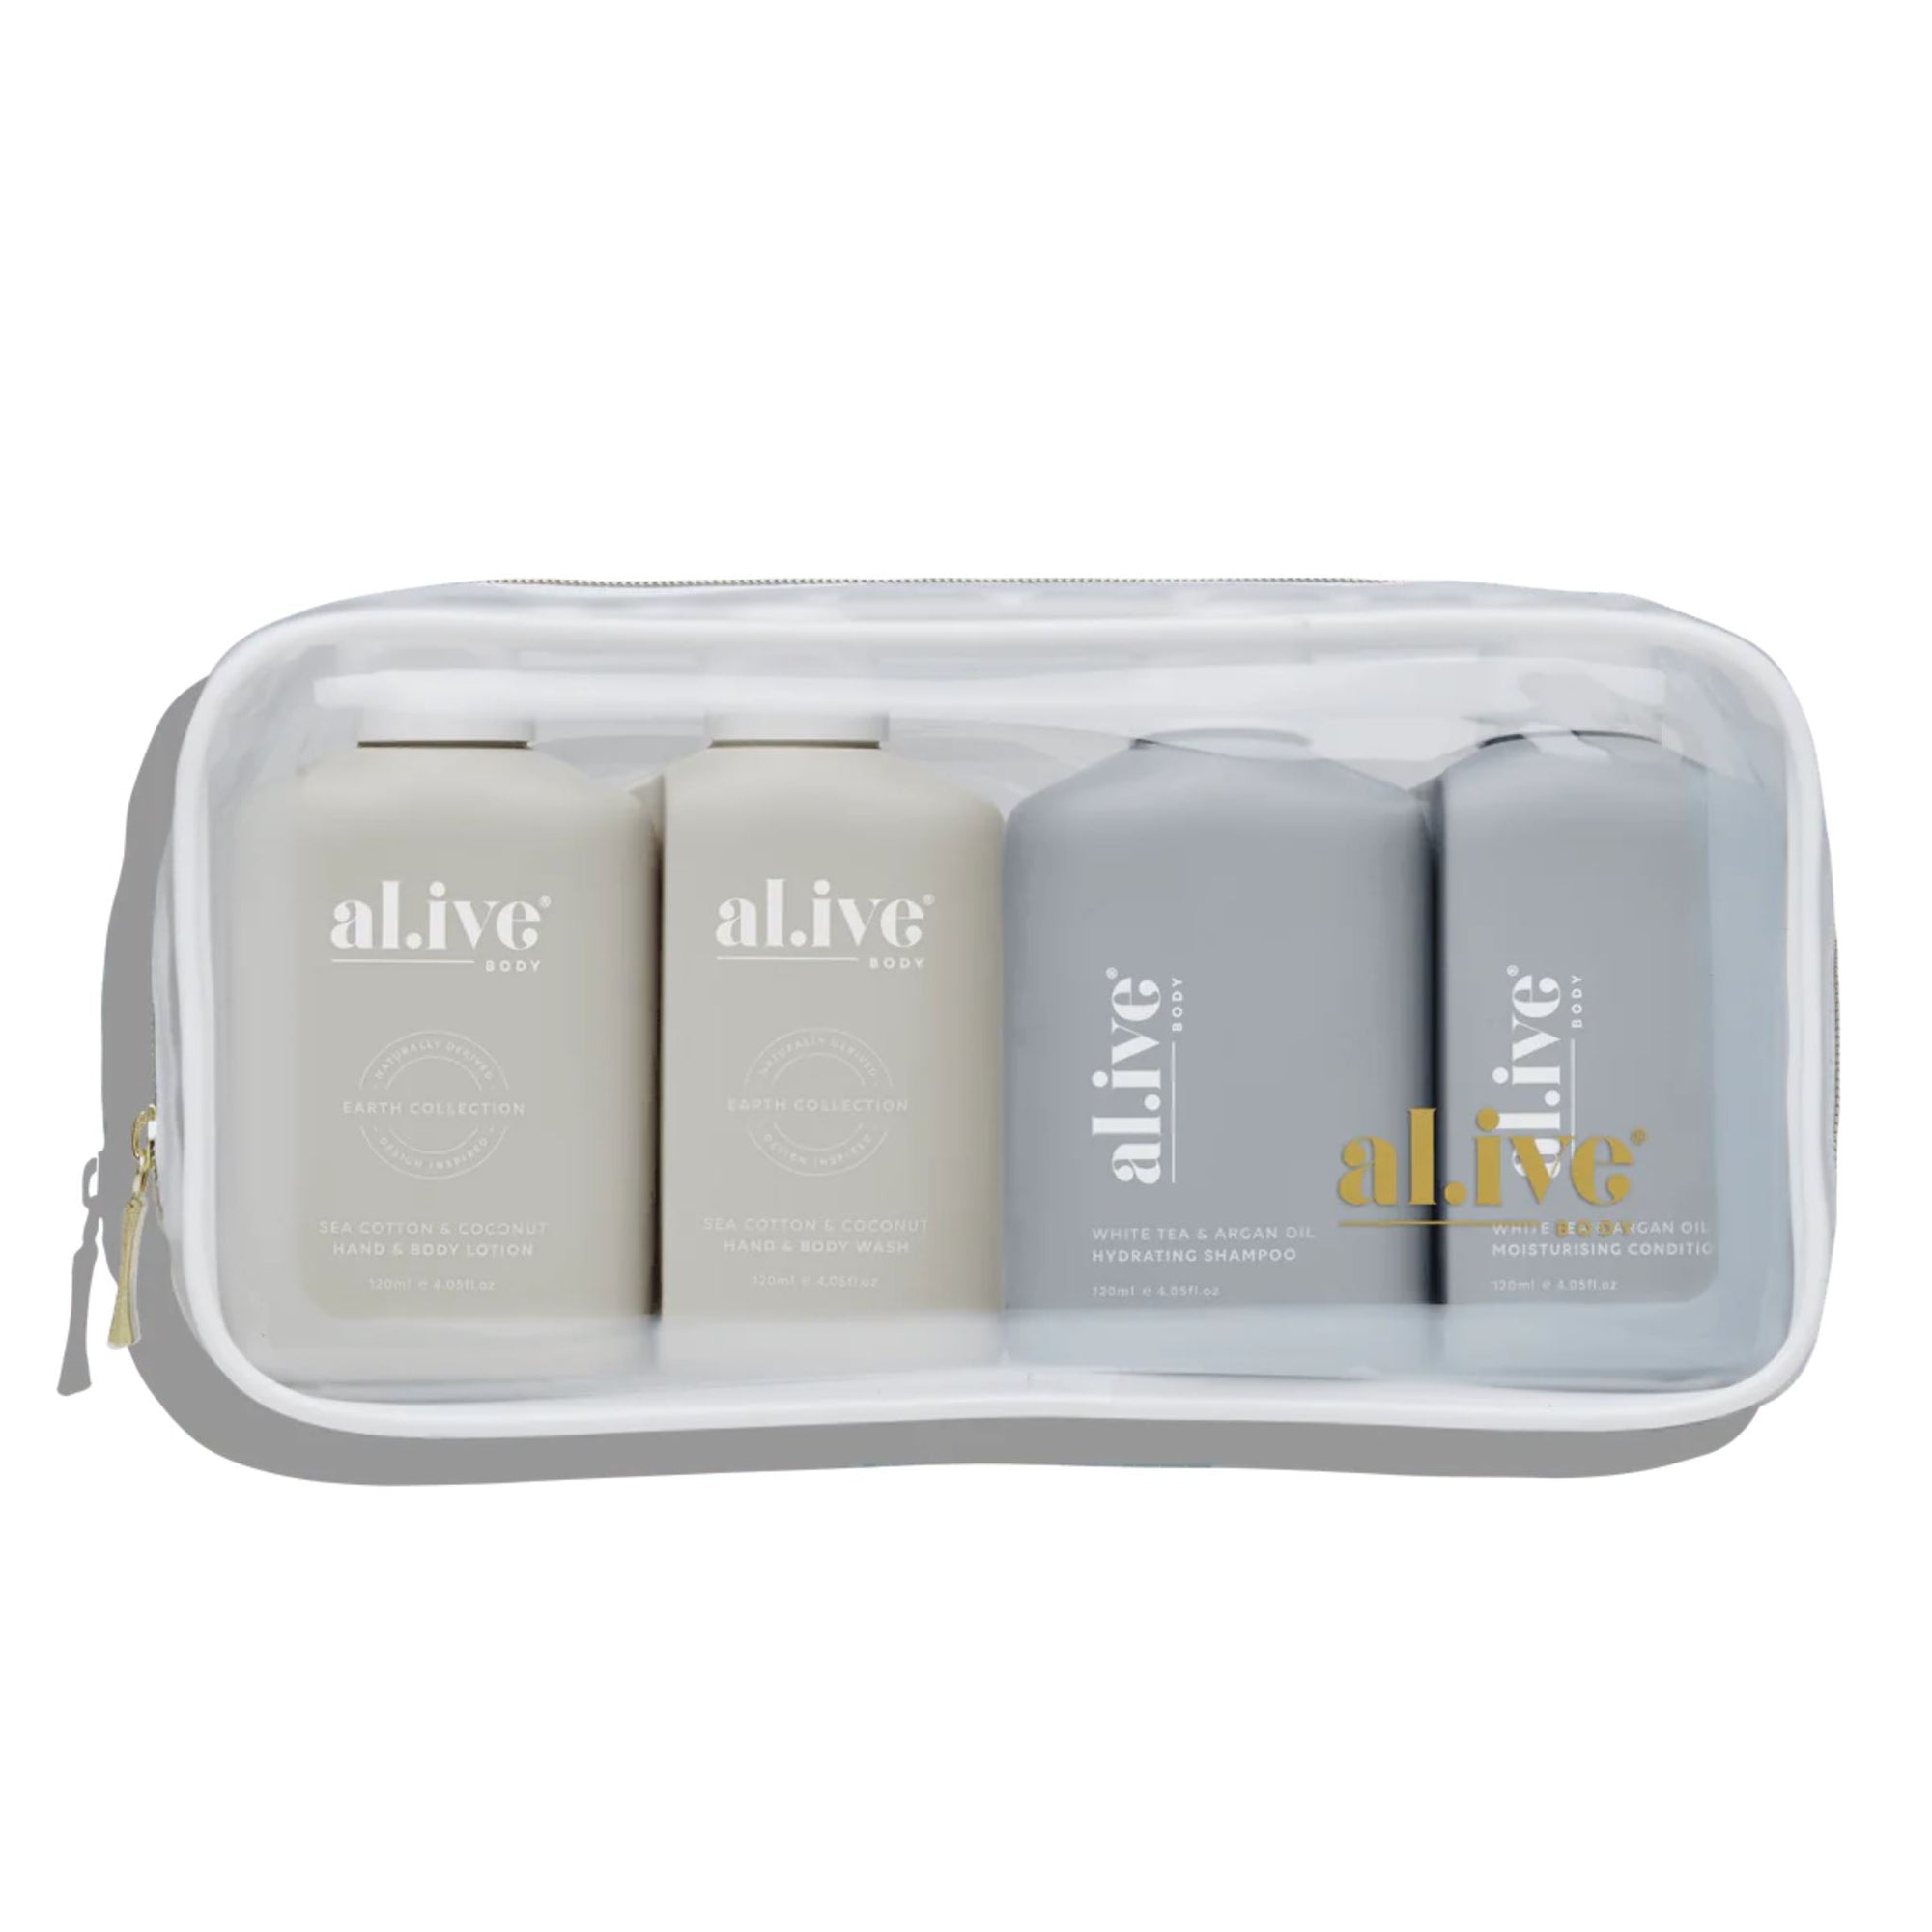 al.ive Hair & Body Travel Pack Travel Accessories al.ive 